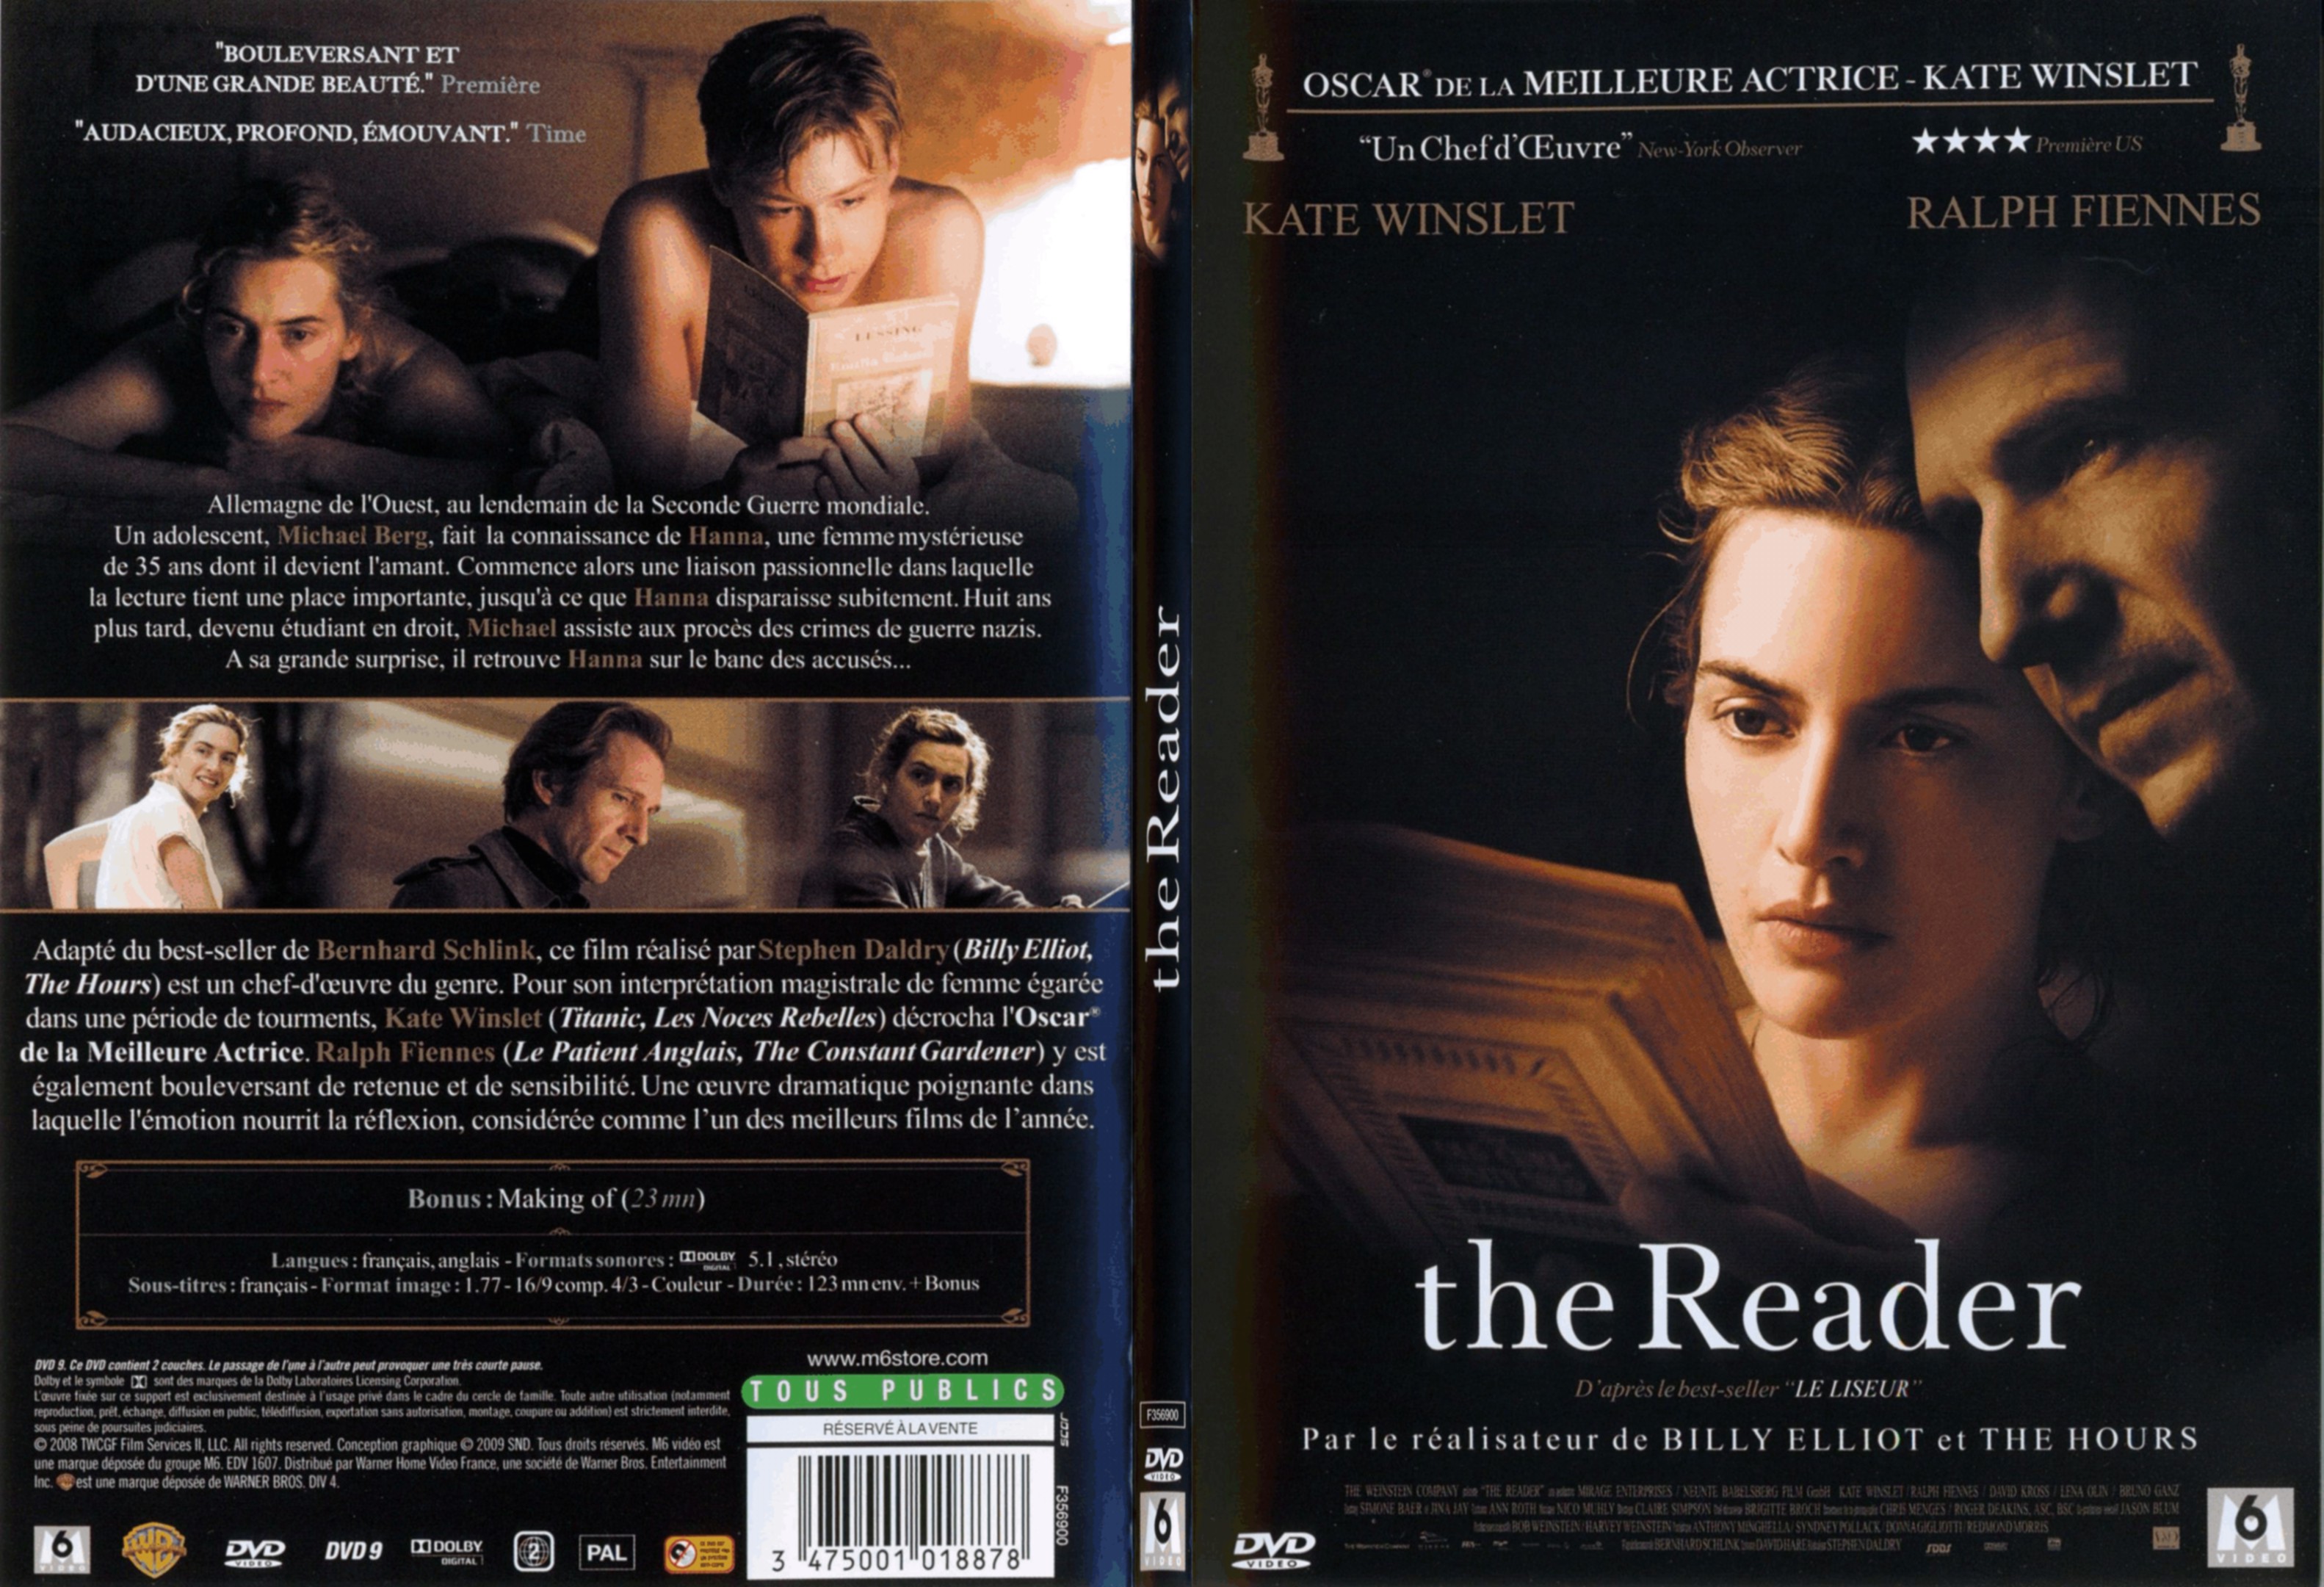 Jaquette DVD The reader - SLIM